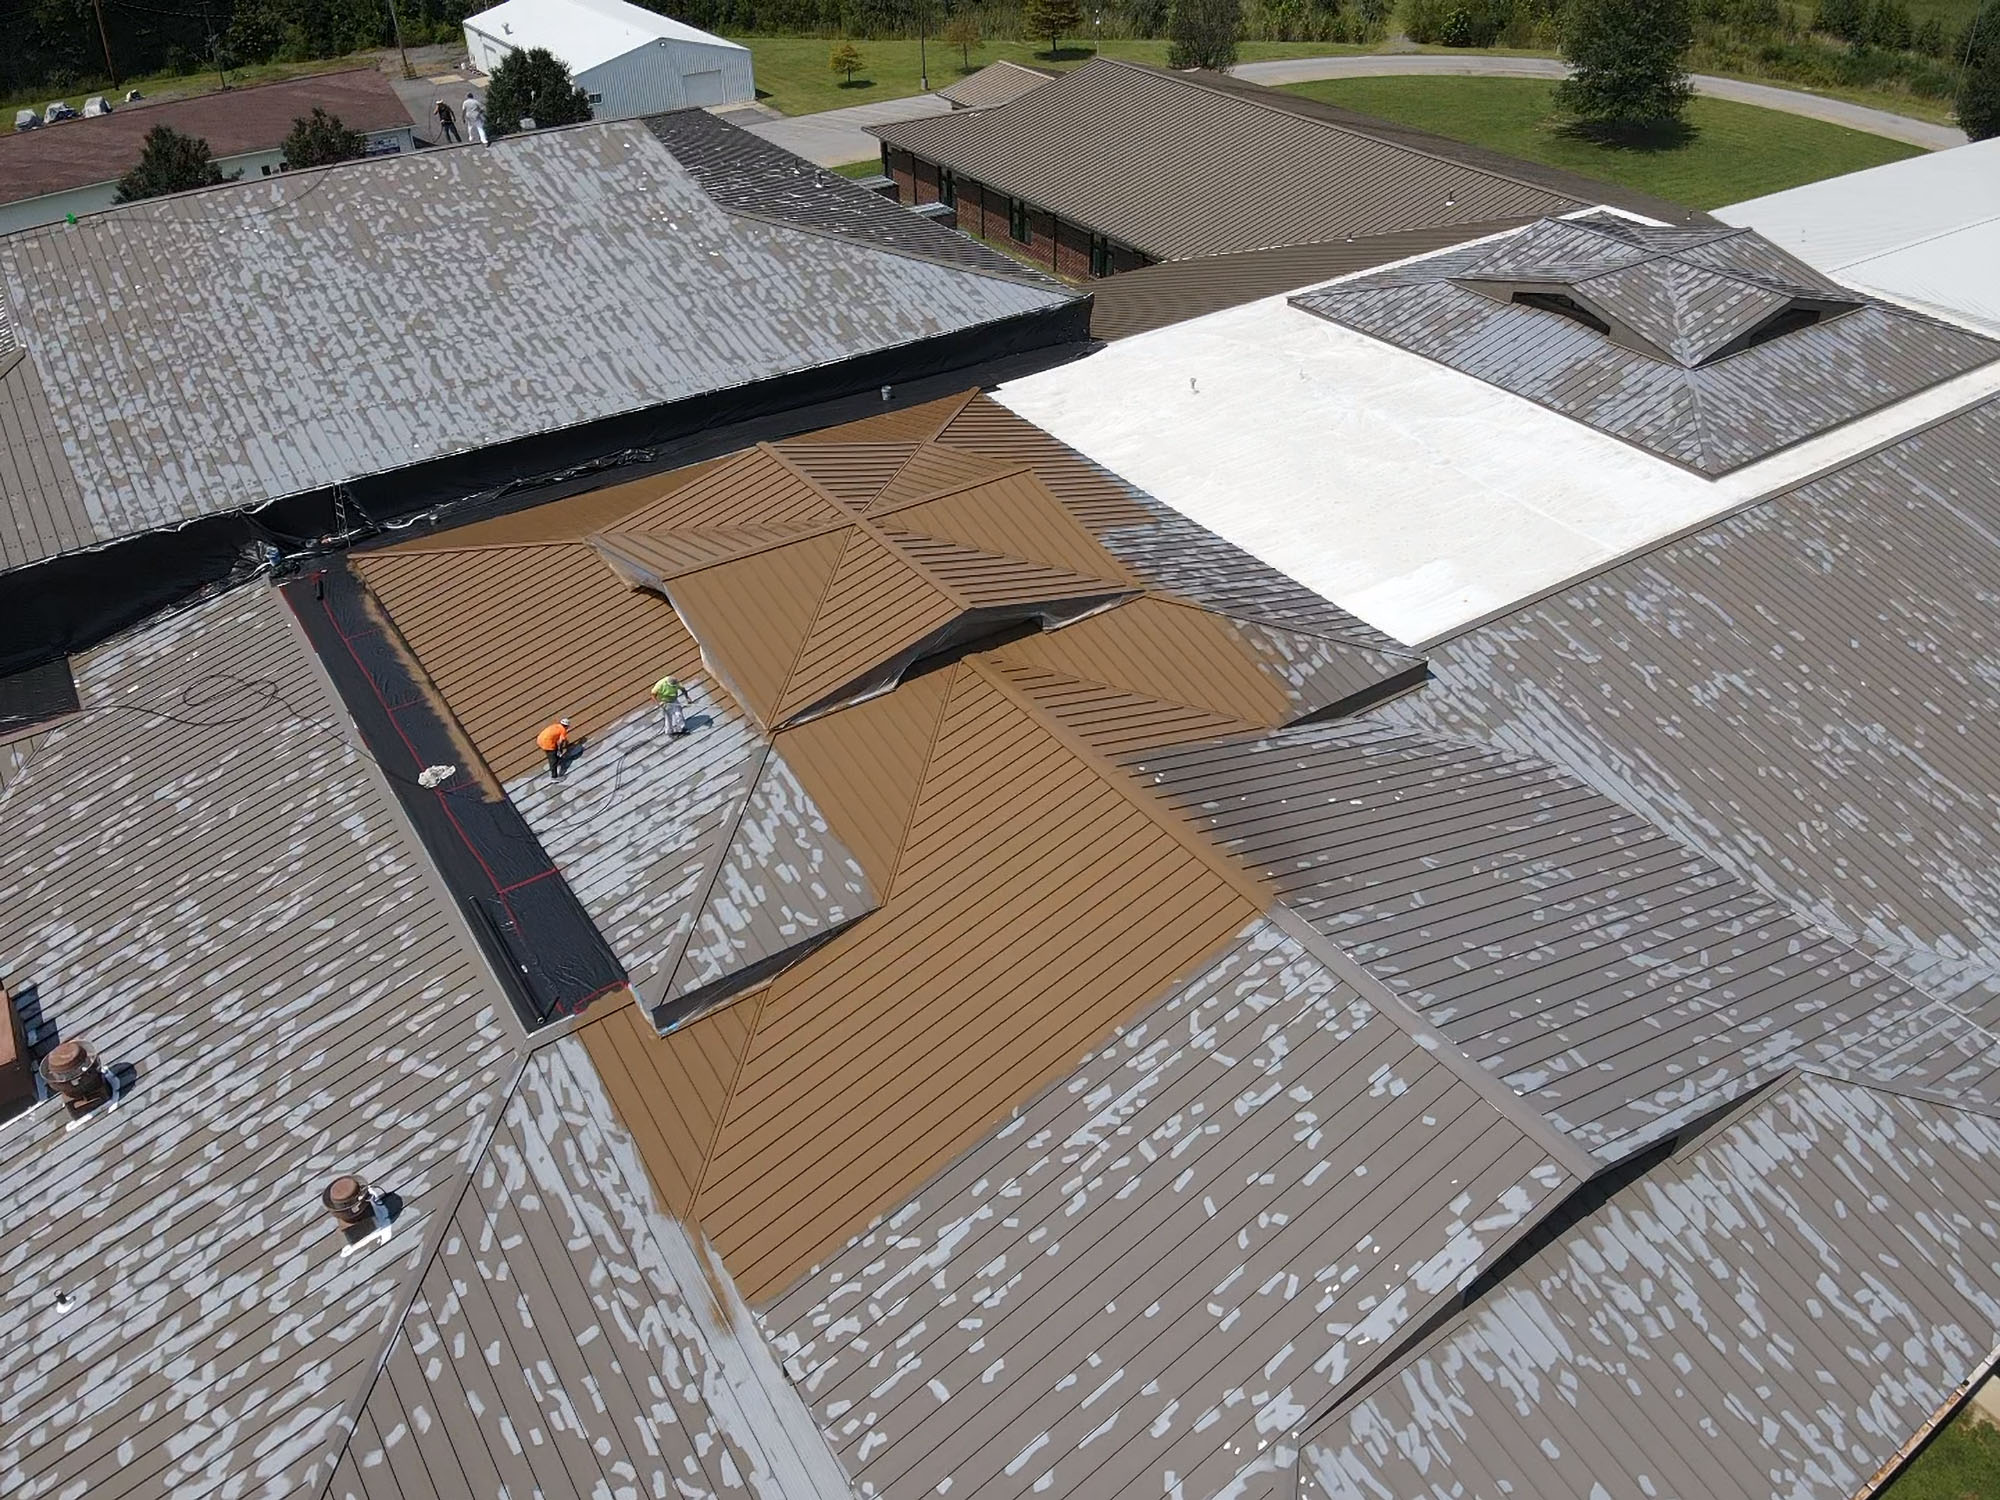 KNIGHTSHIELD roof coating